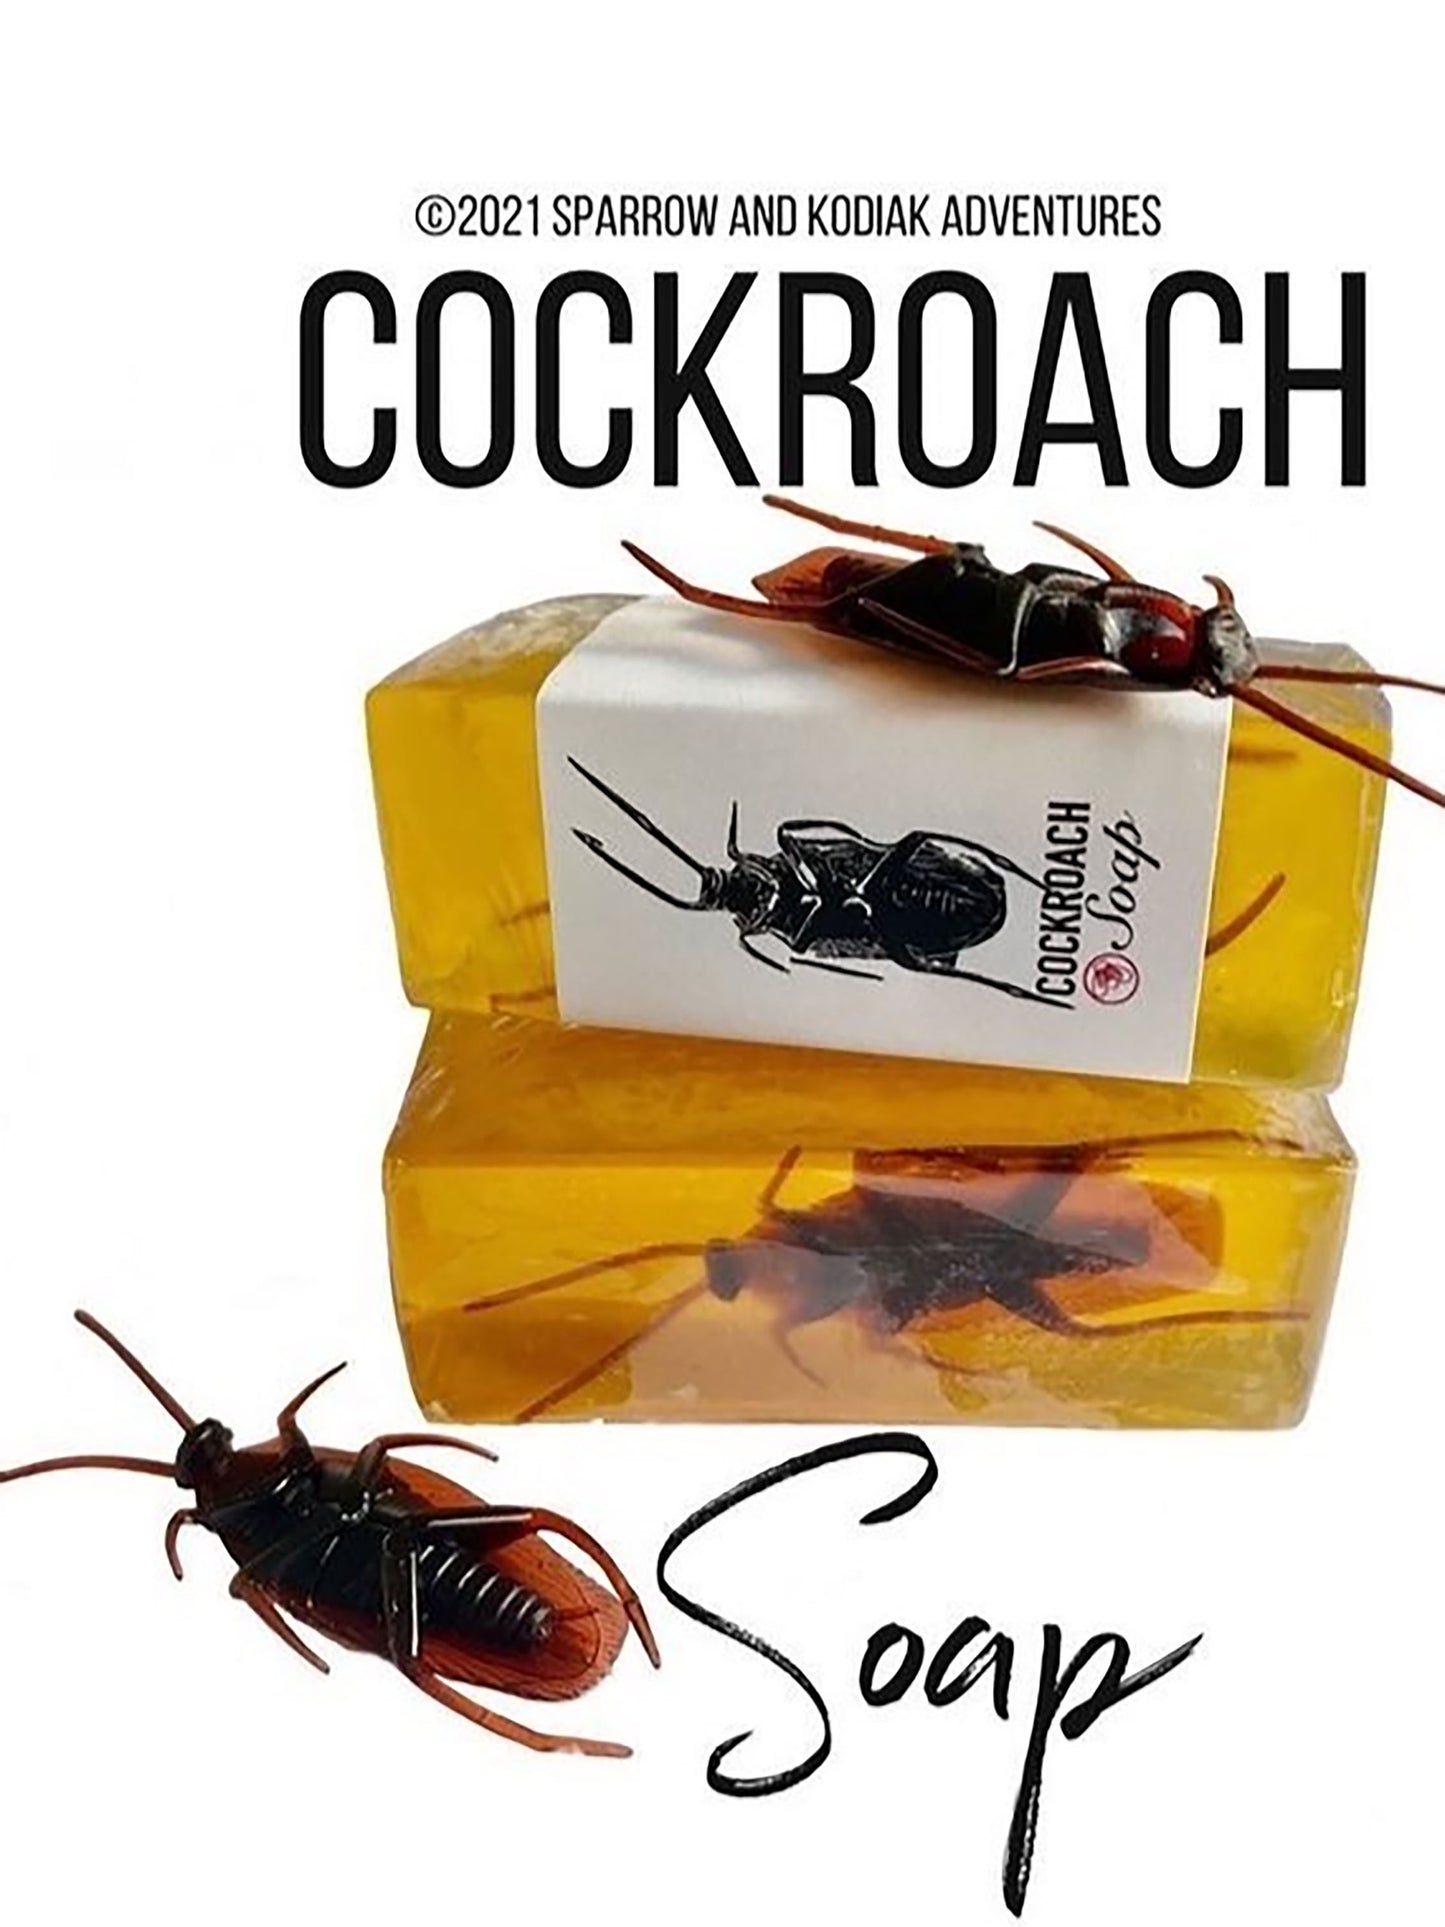 Cockroach Soap